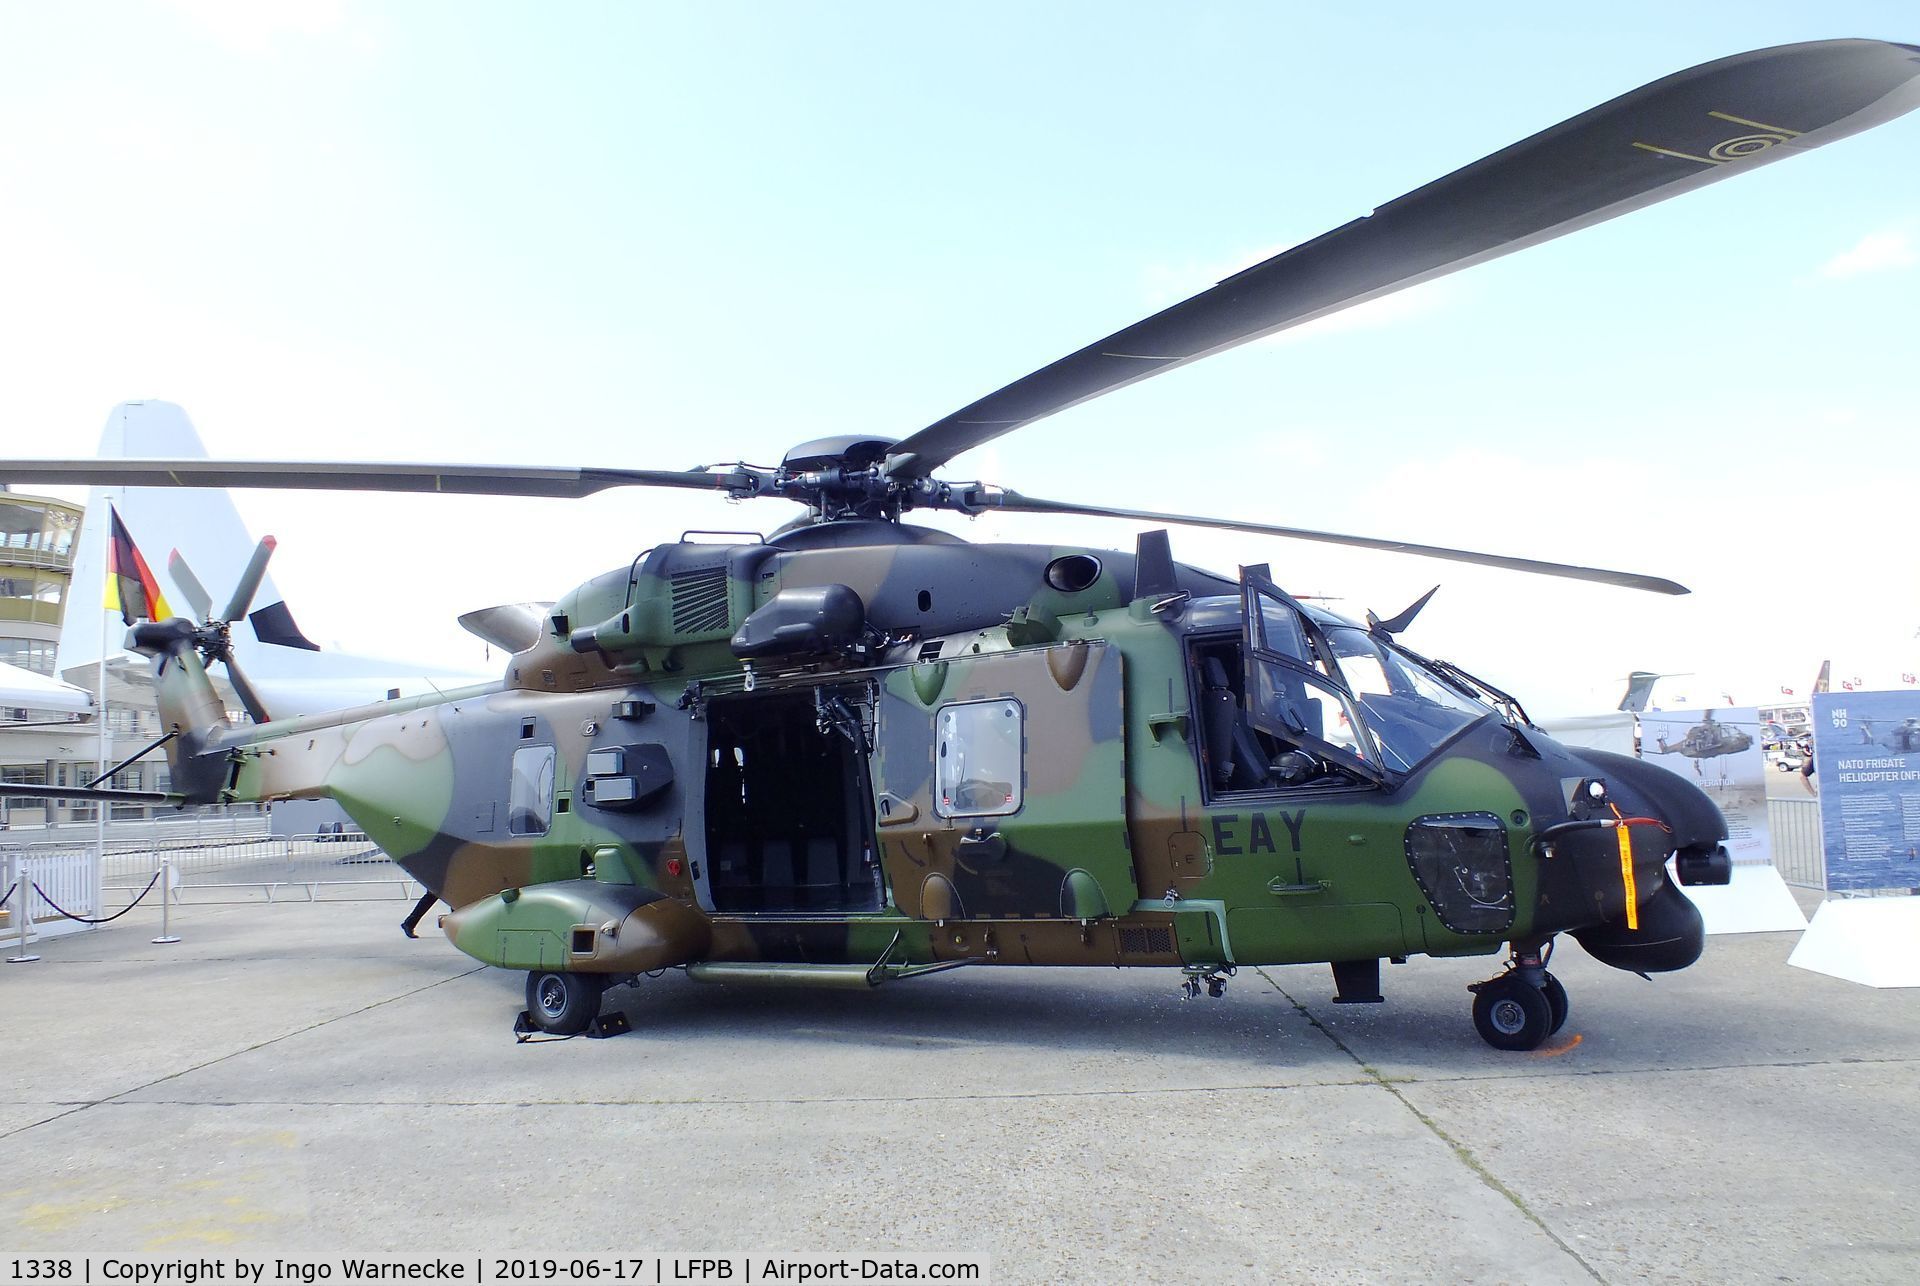 1338, 2017 NHI NH-90 TTH Caiman C/N 1338, NHI NH90 TTH Caiman of ALAT (French army aviation) at the Aerosalon 2019, Paris